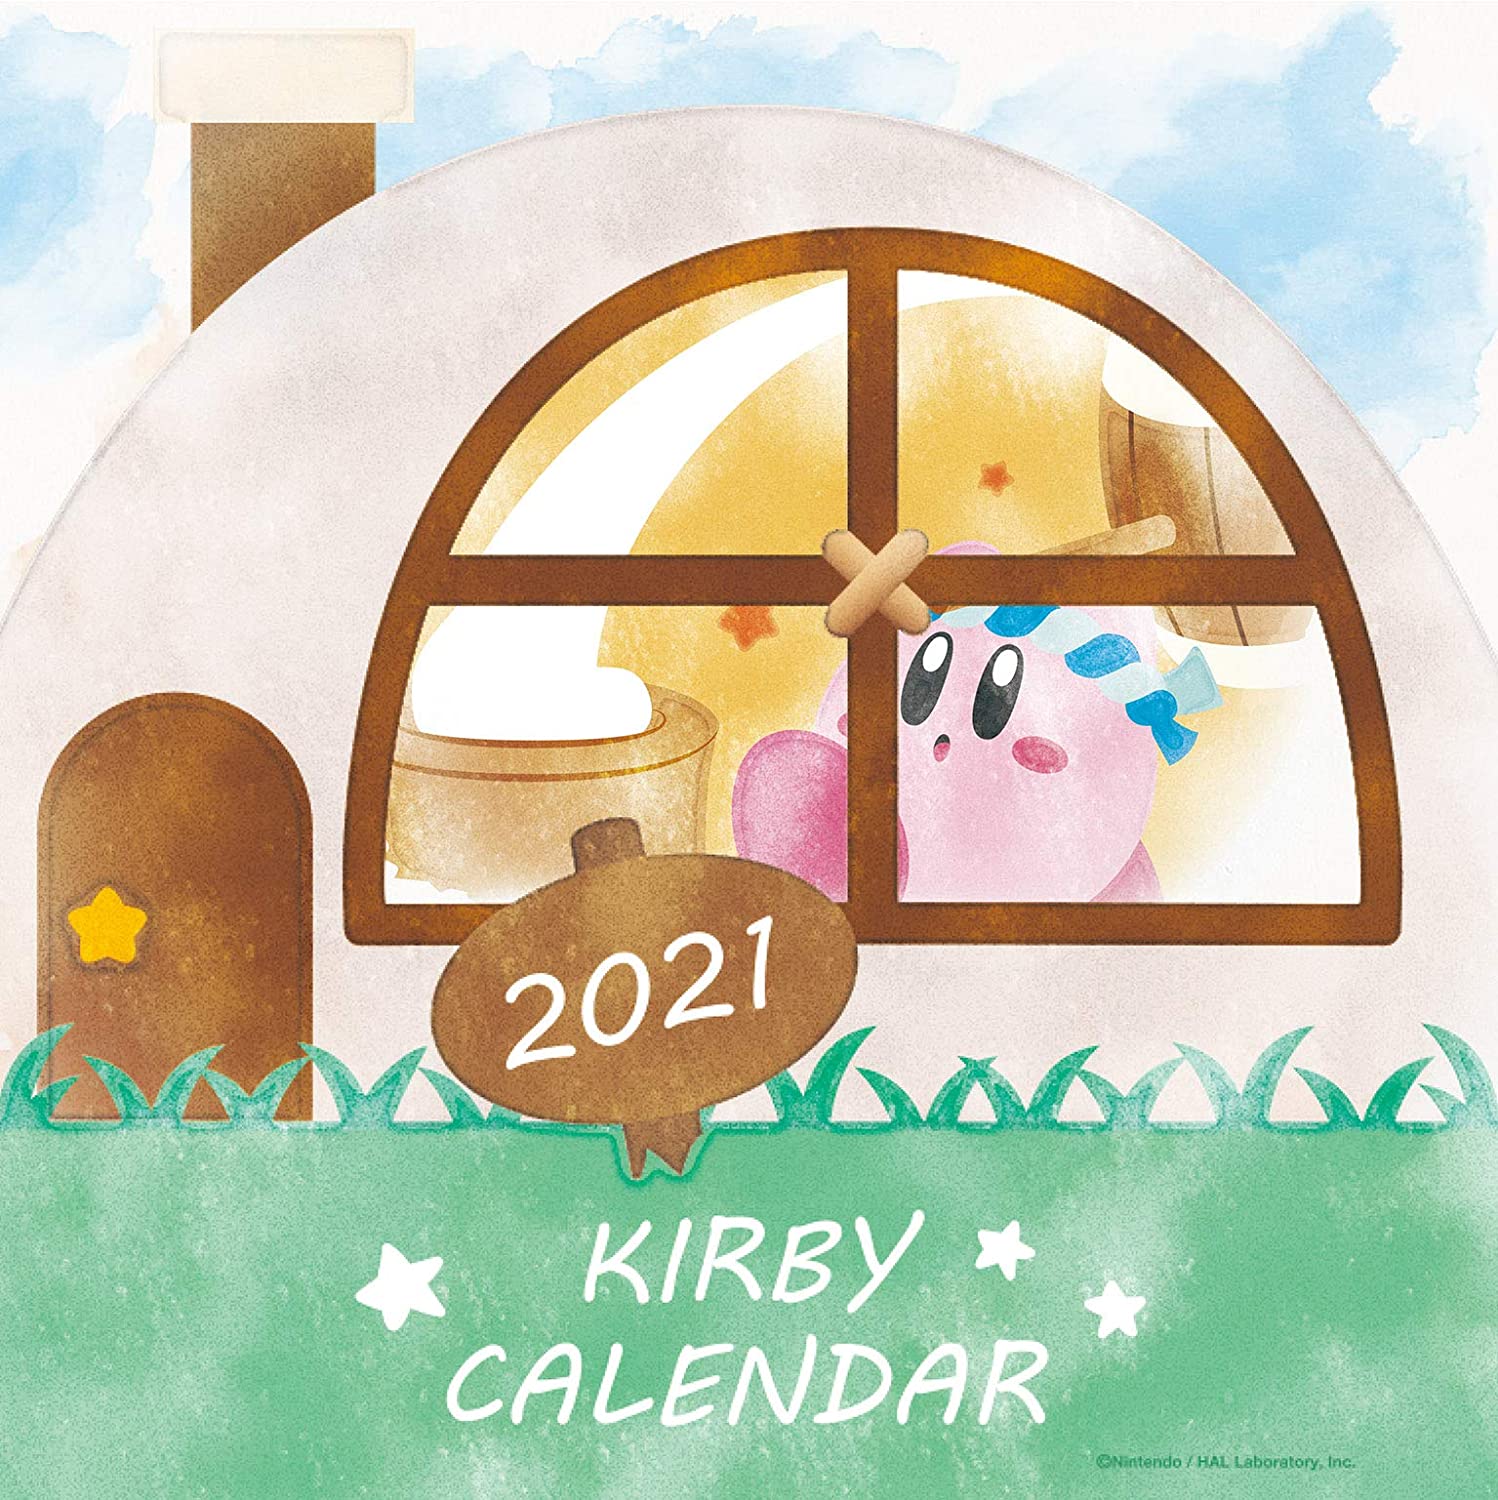 Calendar APR 2021: sarah kirby calendar 2021